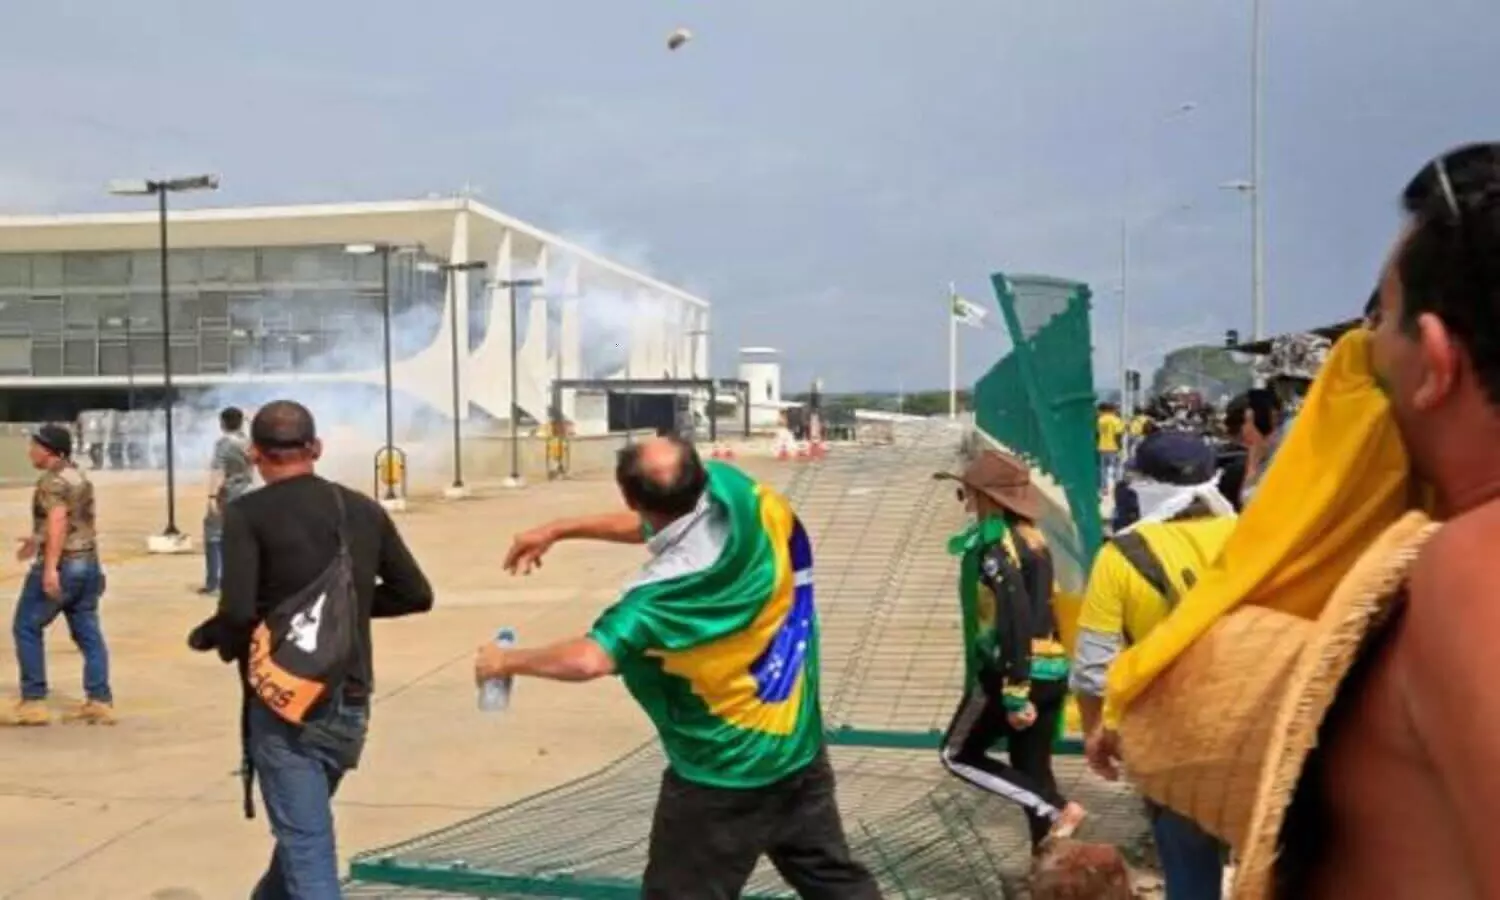 Brazil Riot: